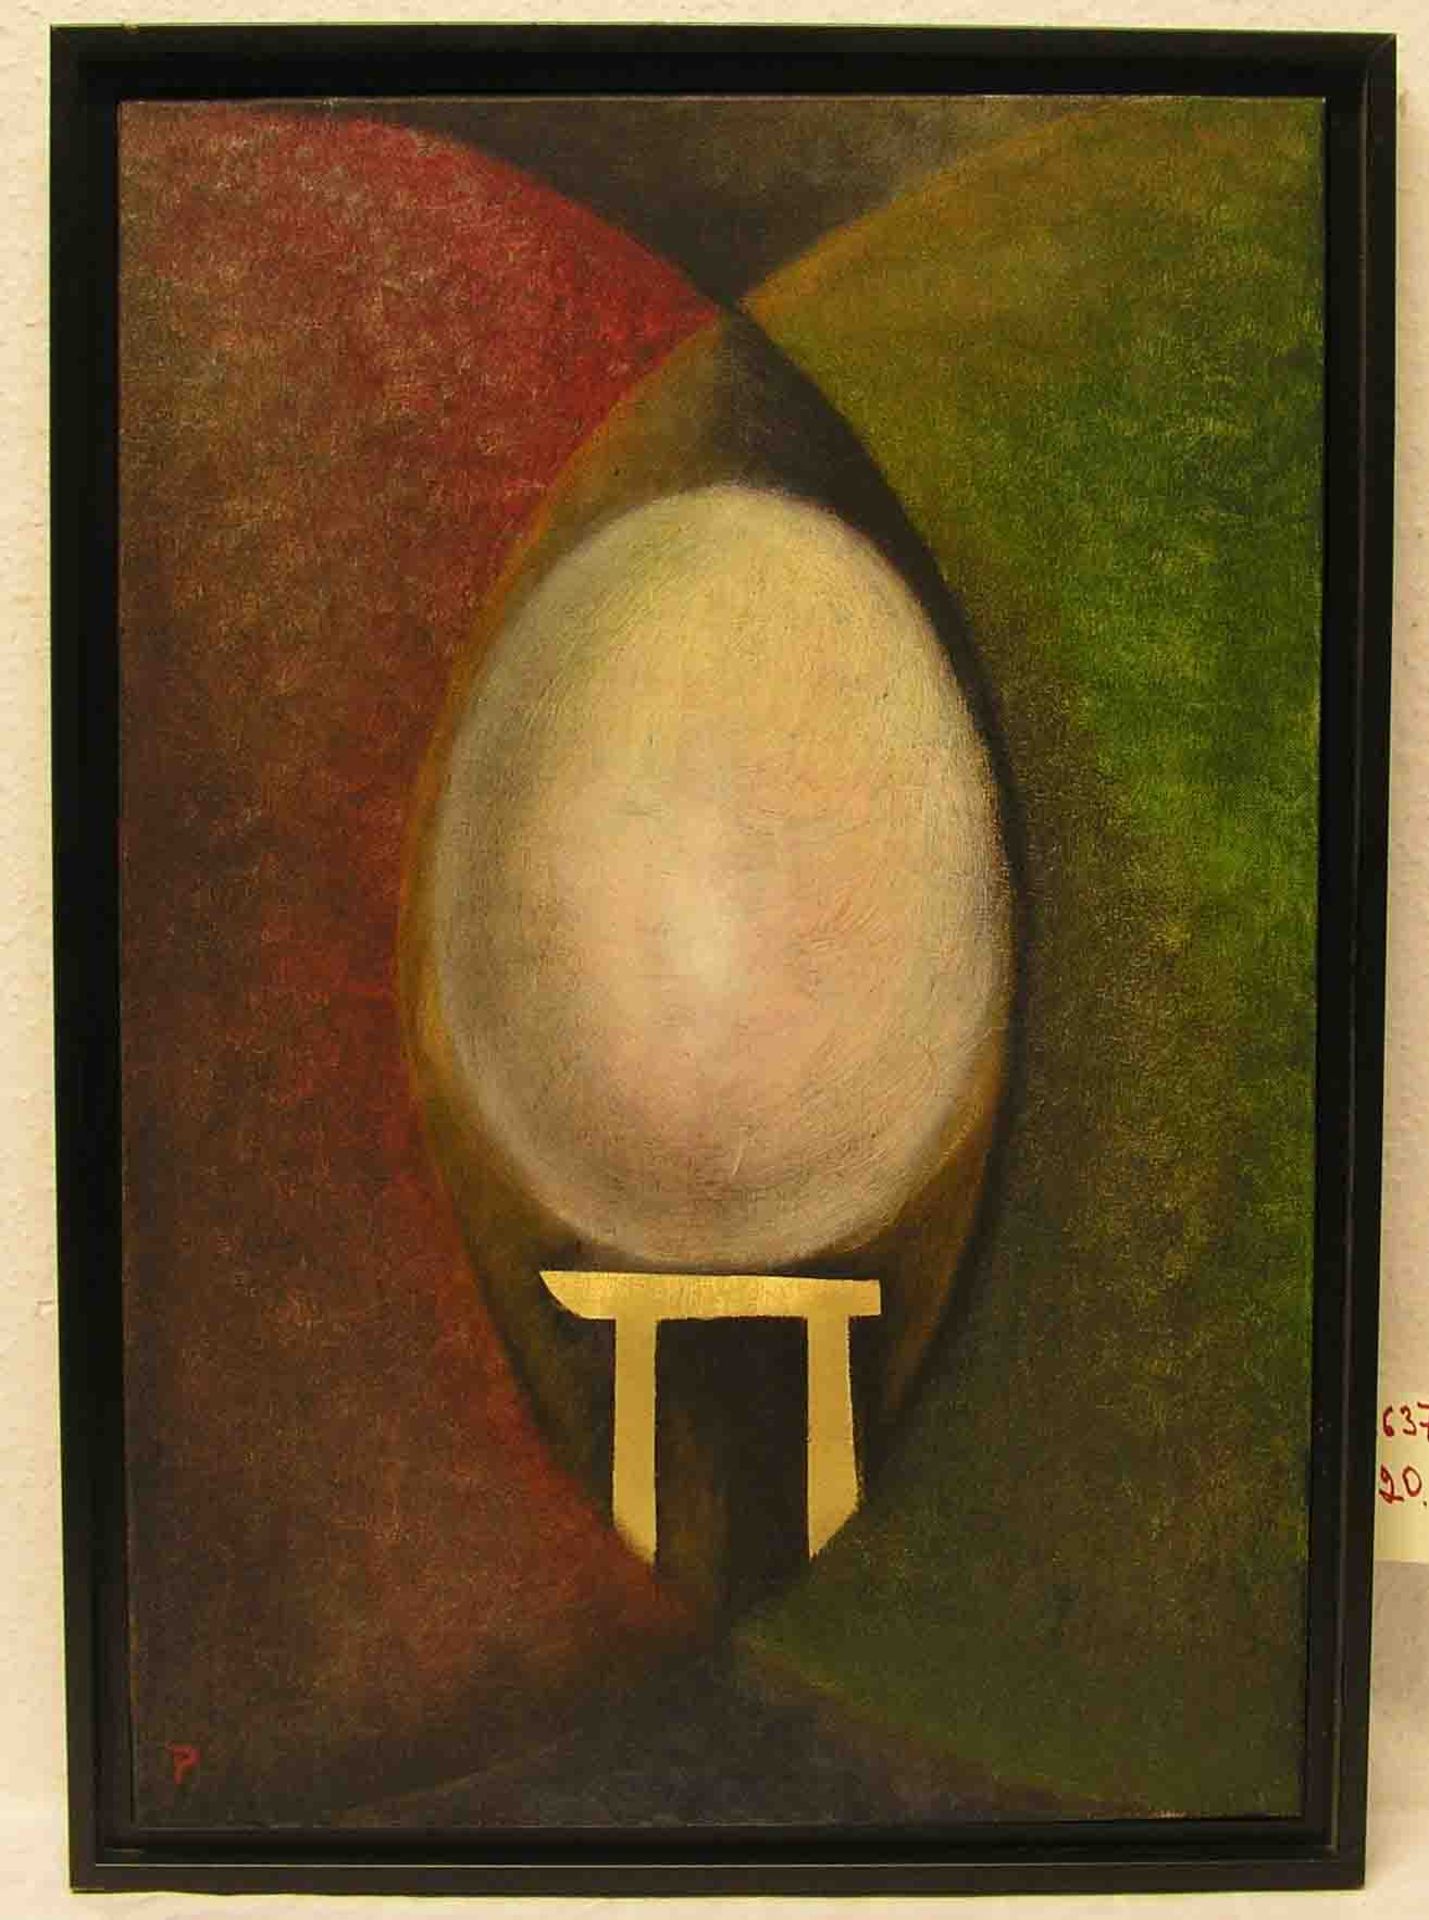 Perskaja, Tanja: "Abstrakte Komposition". Öl/Lwd., monogrammiert. 75 x 50cm, Rahmen.